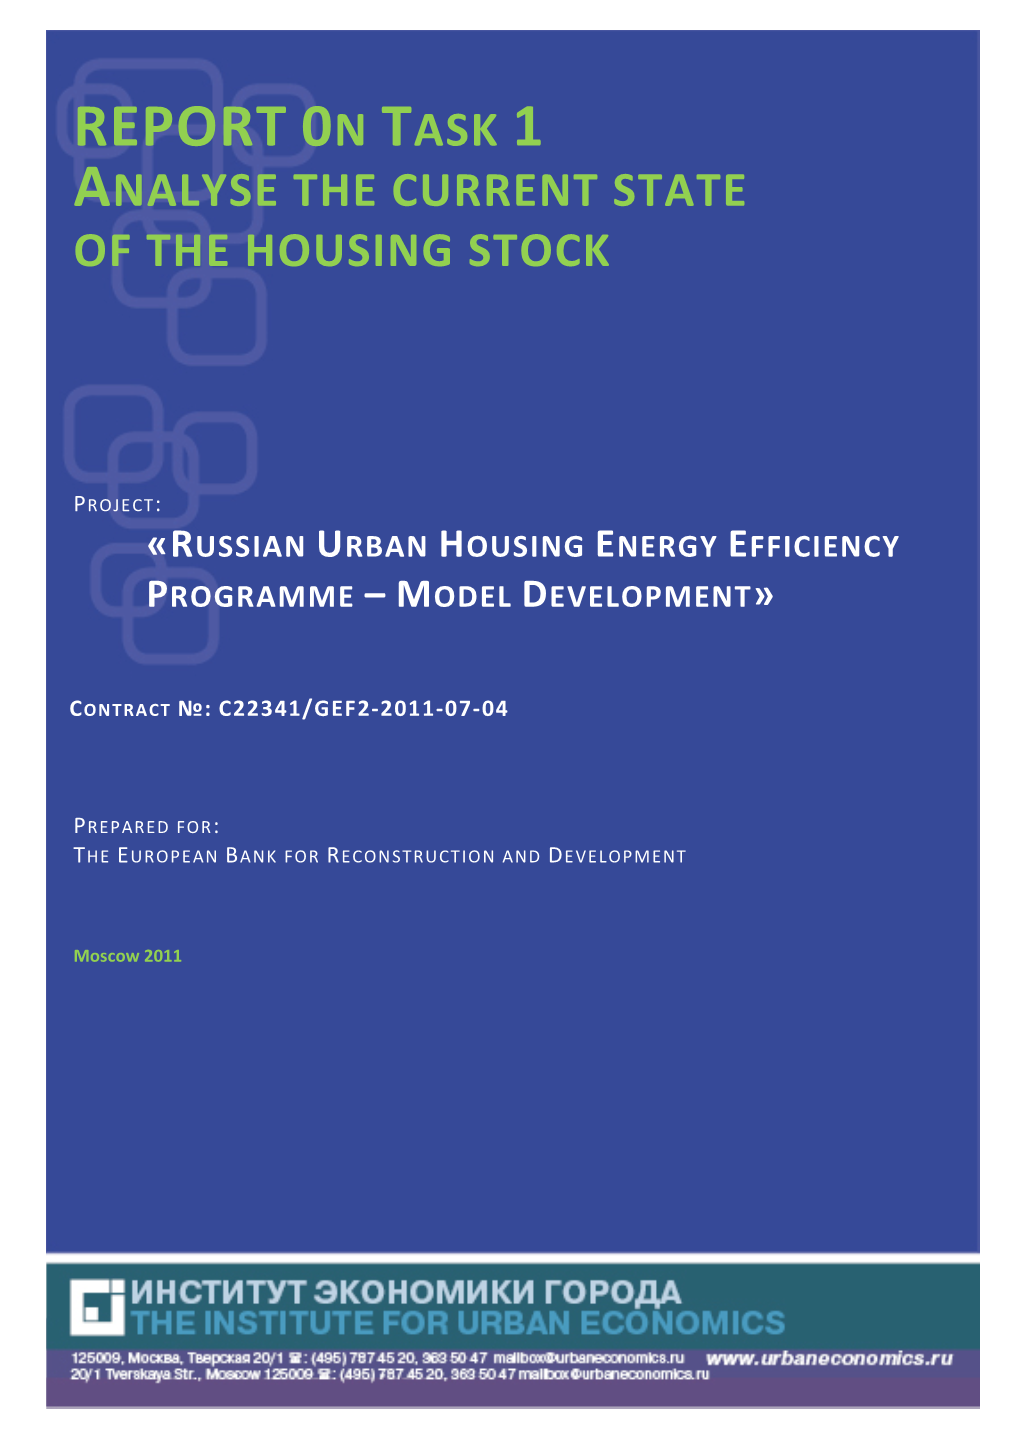 Russian Urban Housing Energy Efficiency Programme